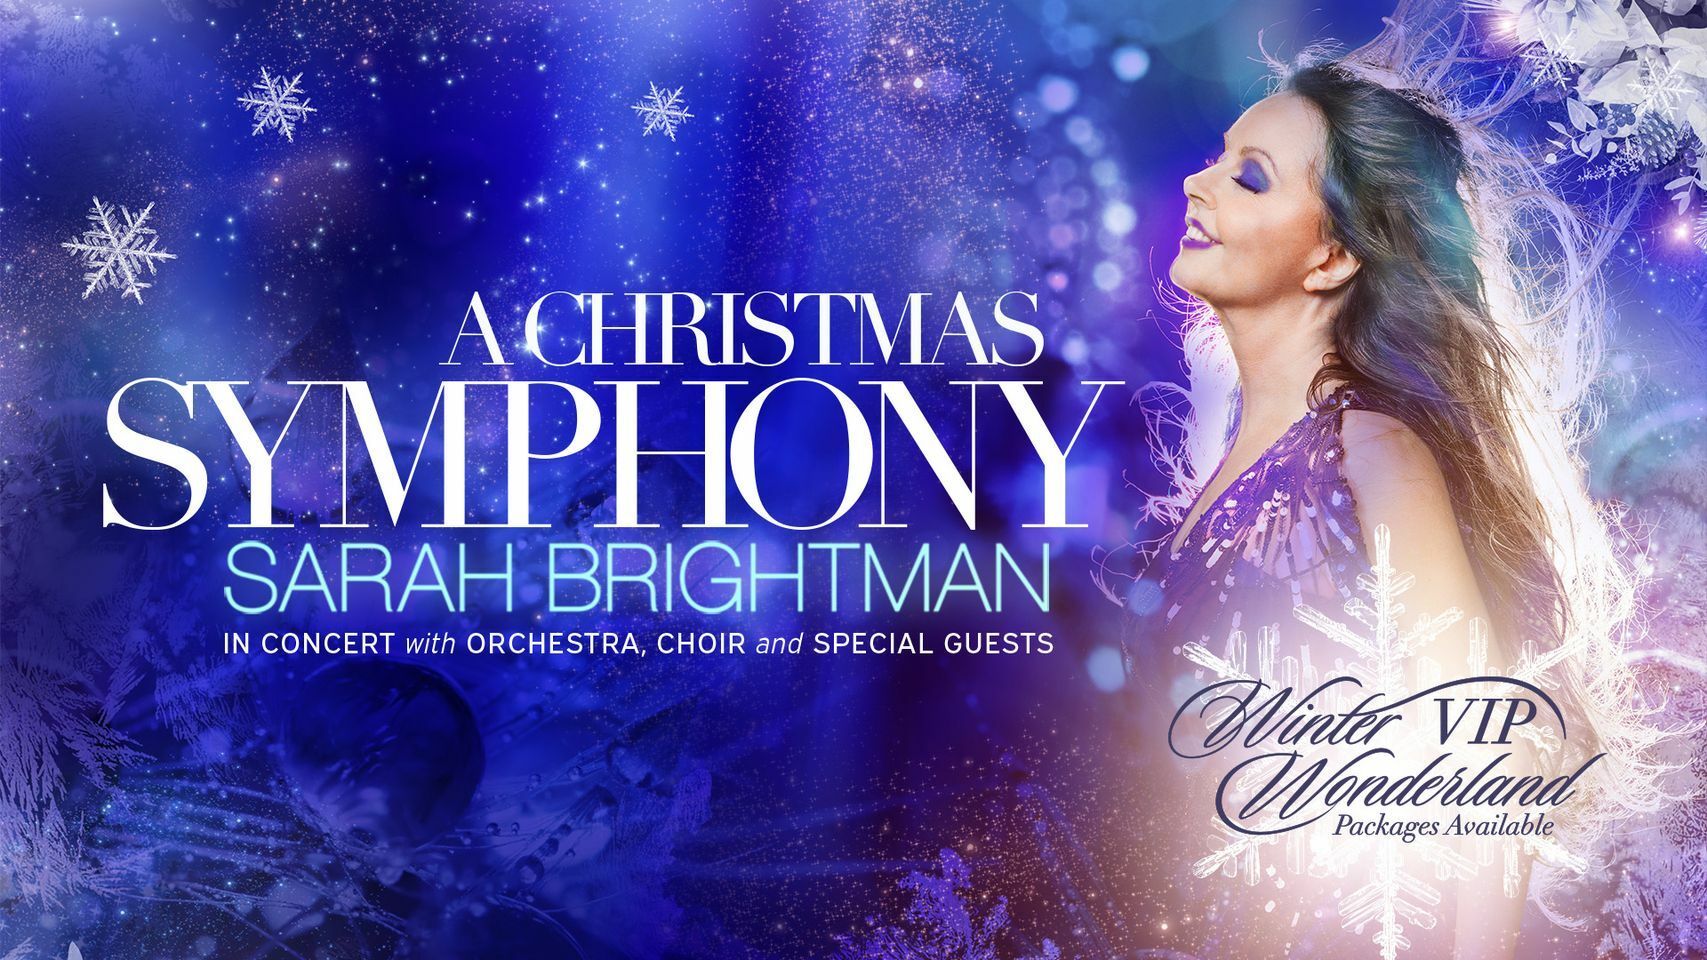 Sarah Brightman - A Christmas Symphony. Live Music Performances ...